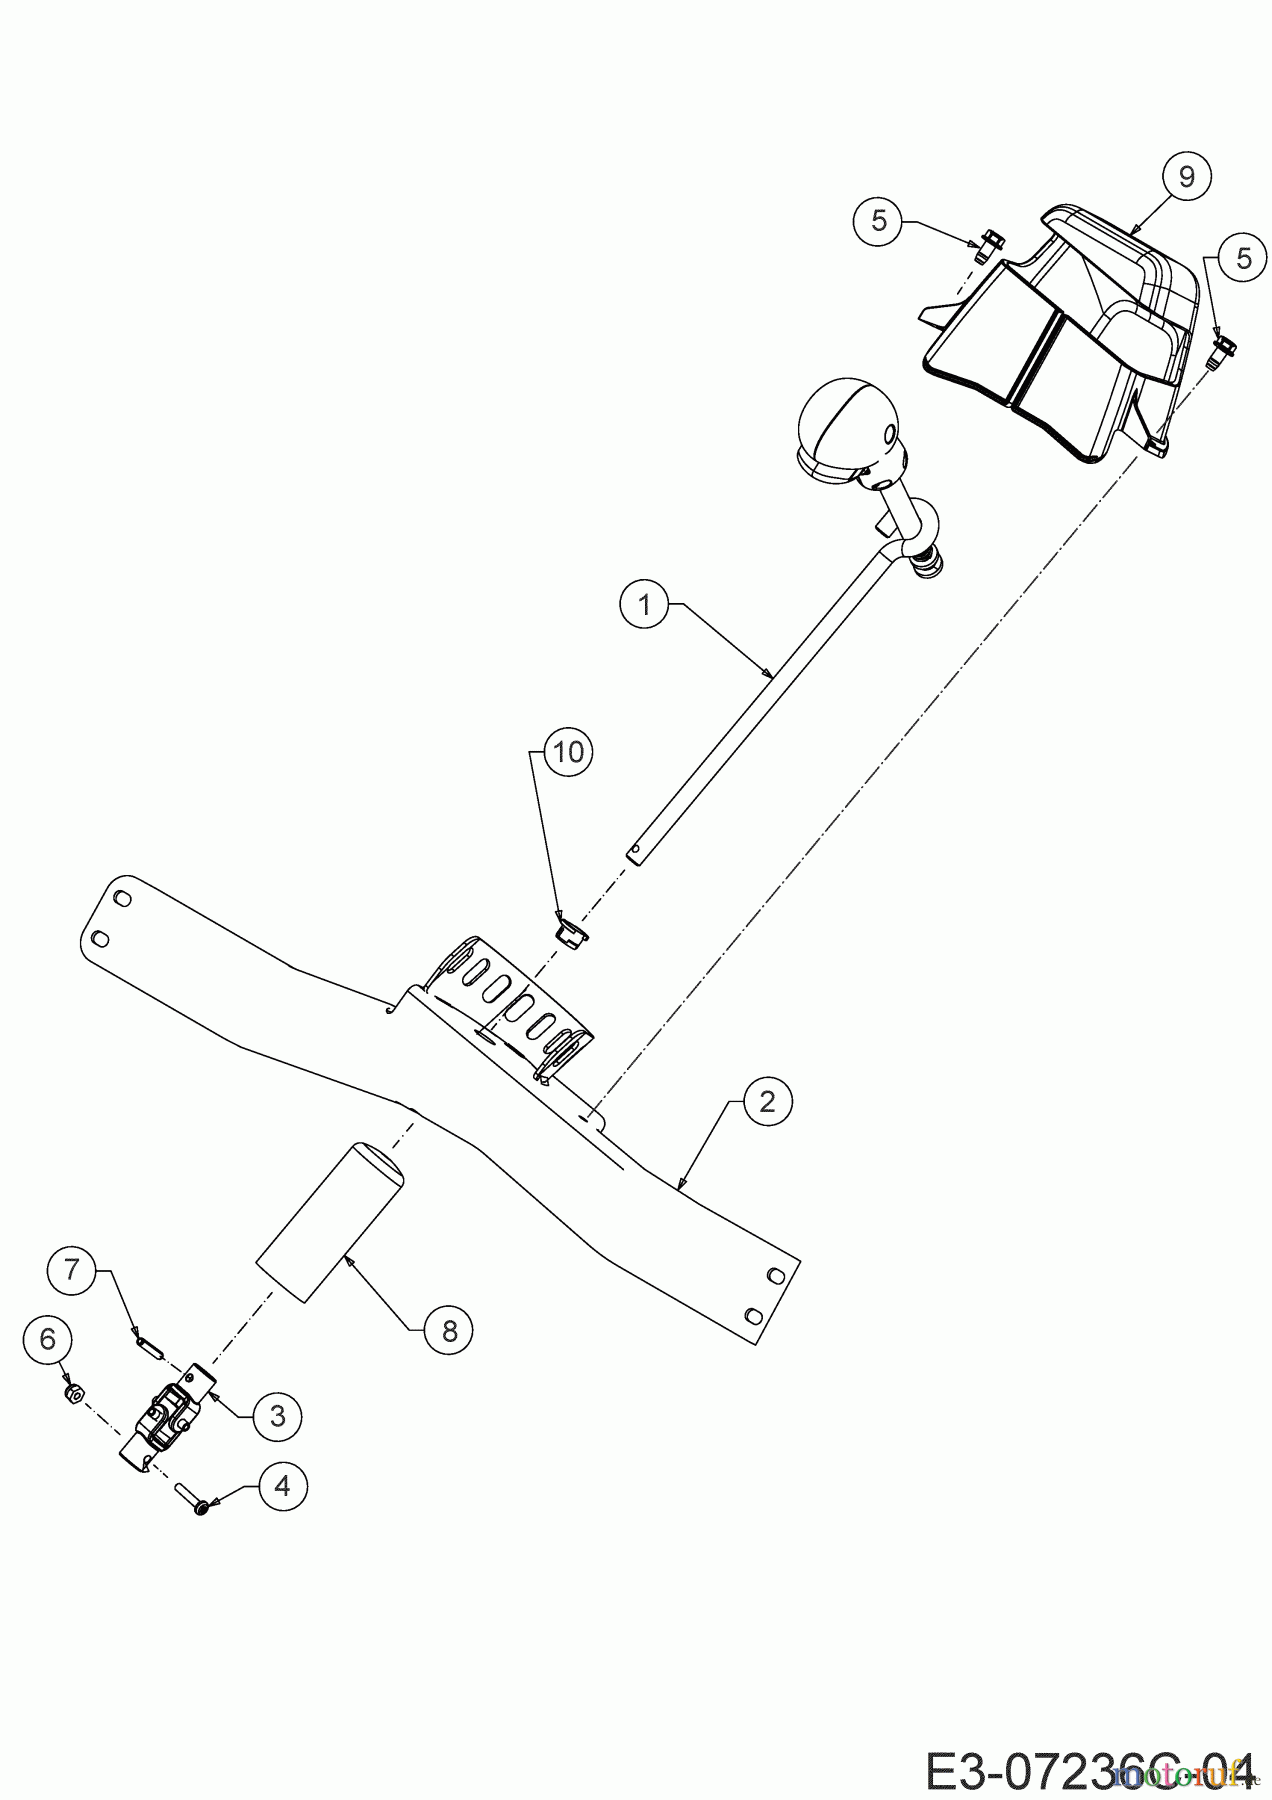  Cub Cadet Snow throwers 221 LHP 31AR2T6D603  (2020) Chute rotation linkage